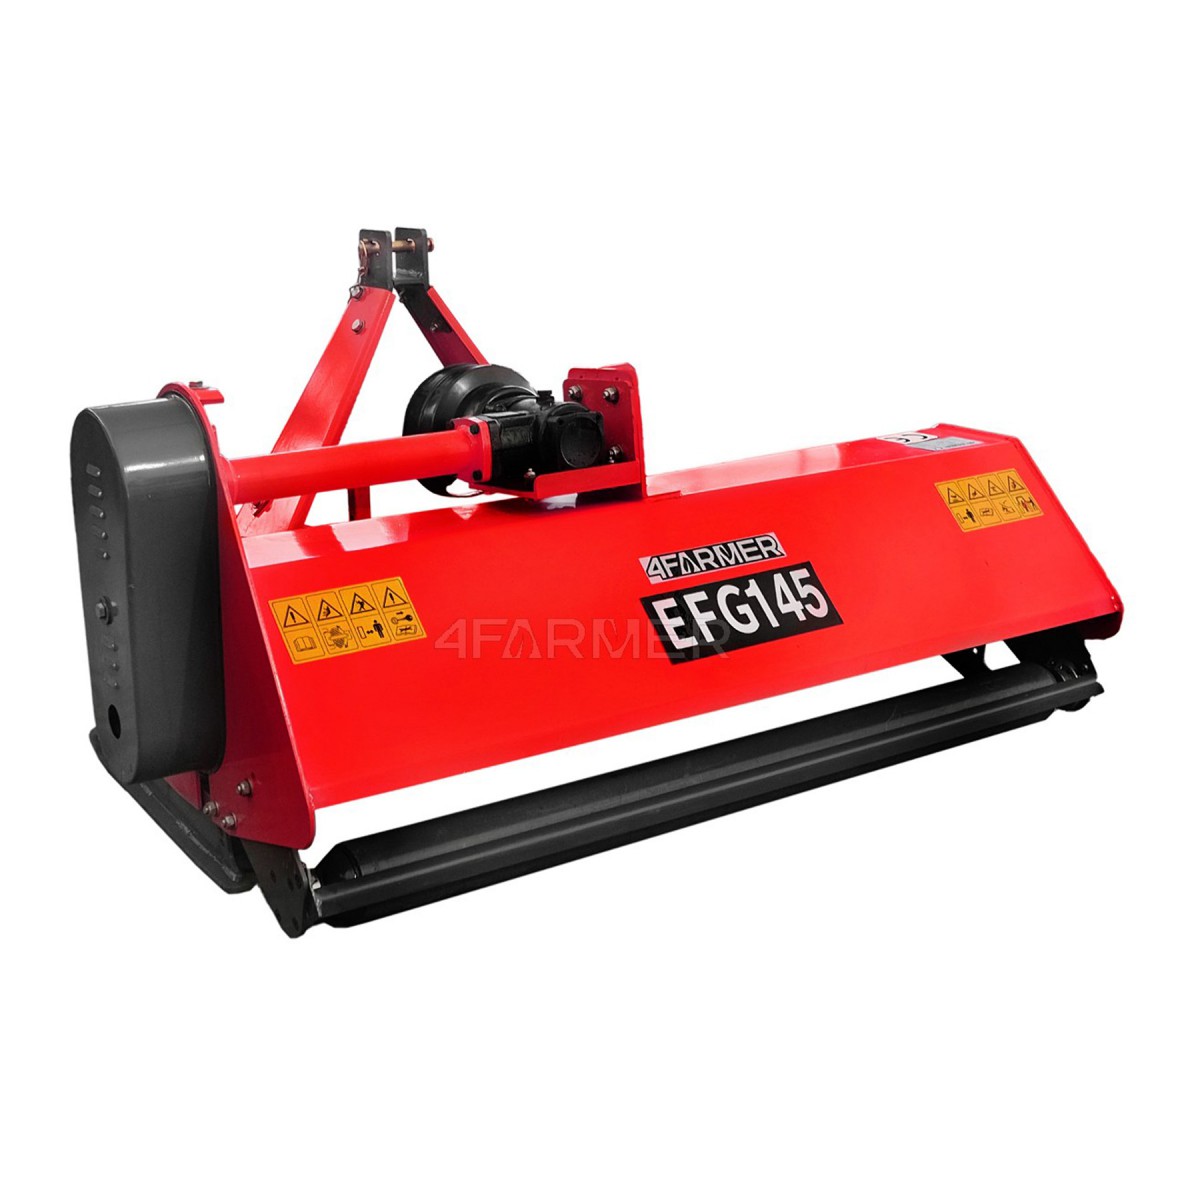 EFG 135 4FARMER flail mower - red